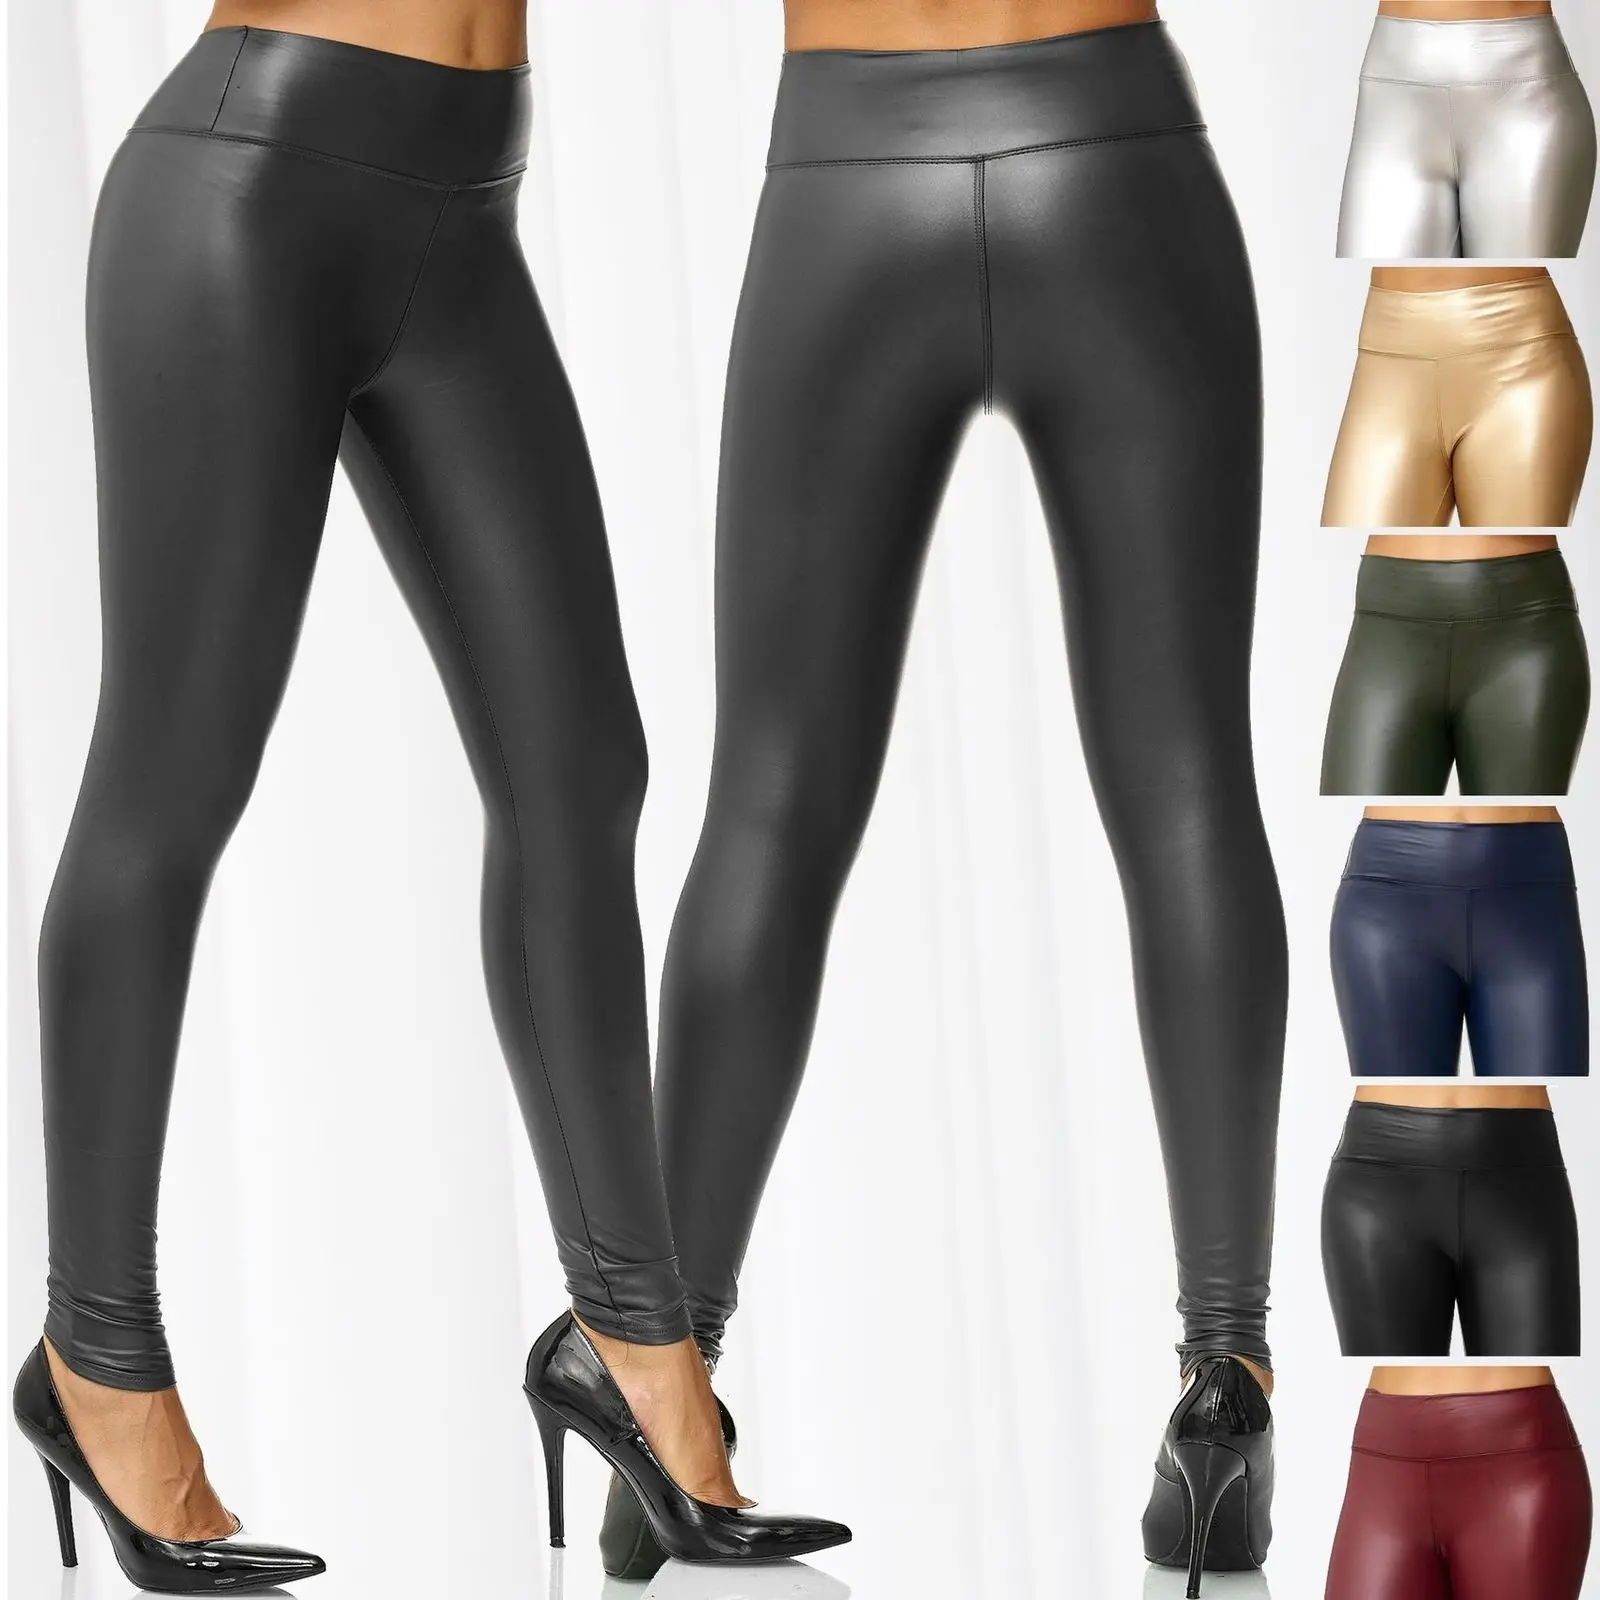 

ZOGAA 2019 Fashion Women's Leggings Metallic Leather High Waist Wet Stretch Shine Pants Slim Fit Sexy Trousers Pencil Sexy Pants